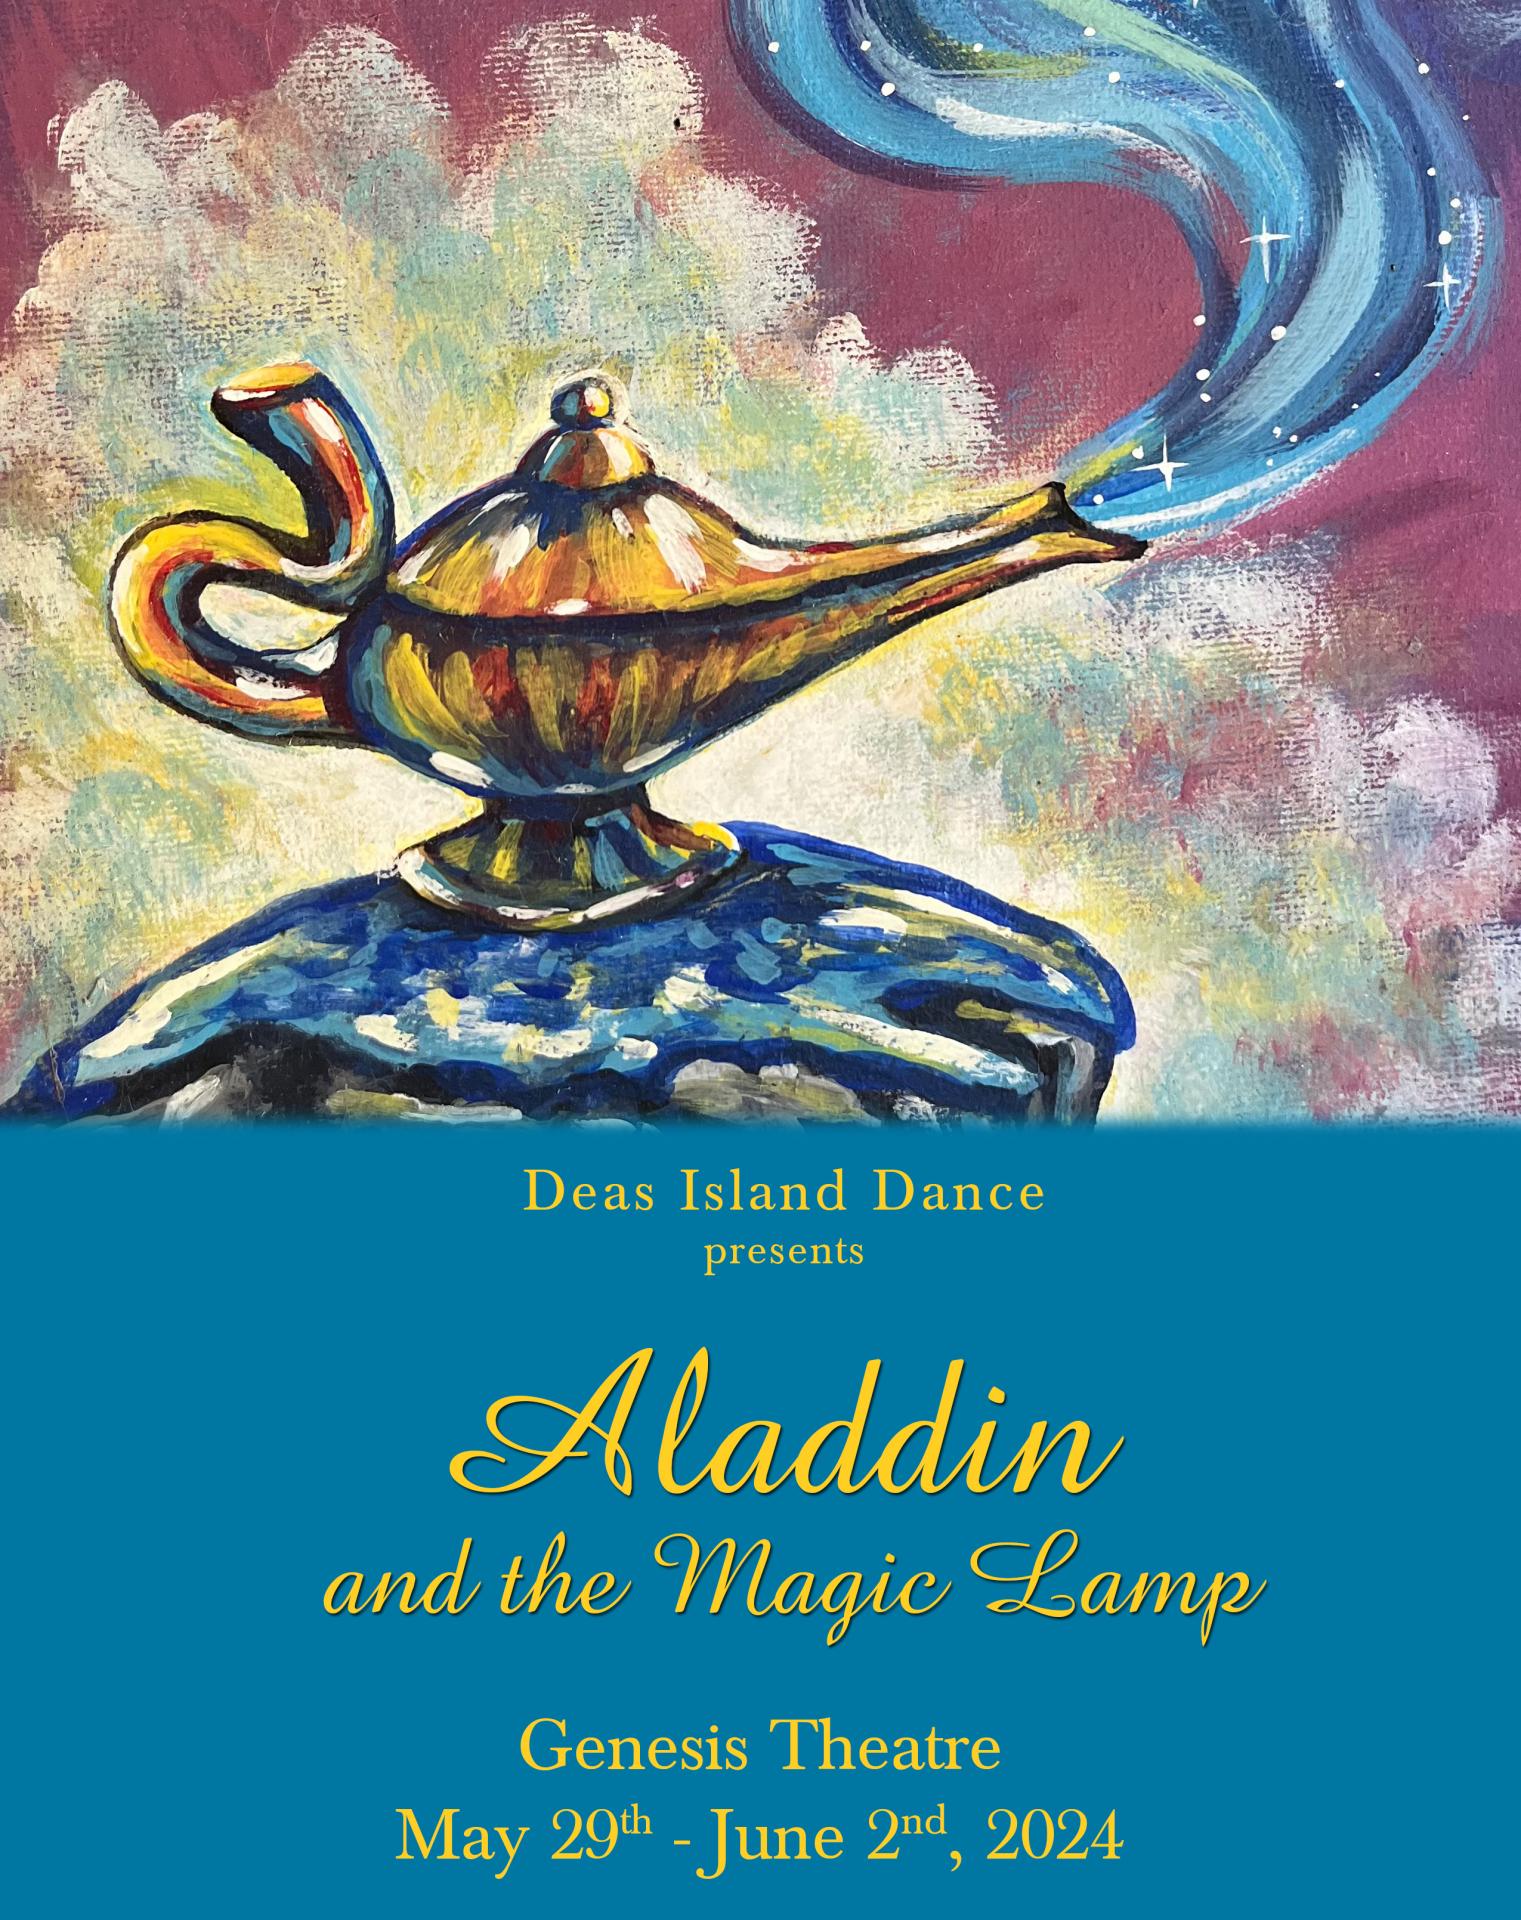 Deas Island Dance Presents: Aladdin (Afternoon)